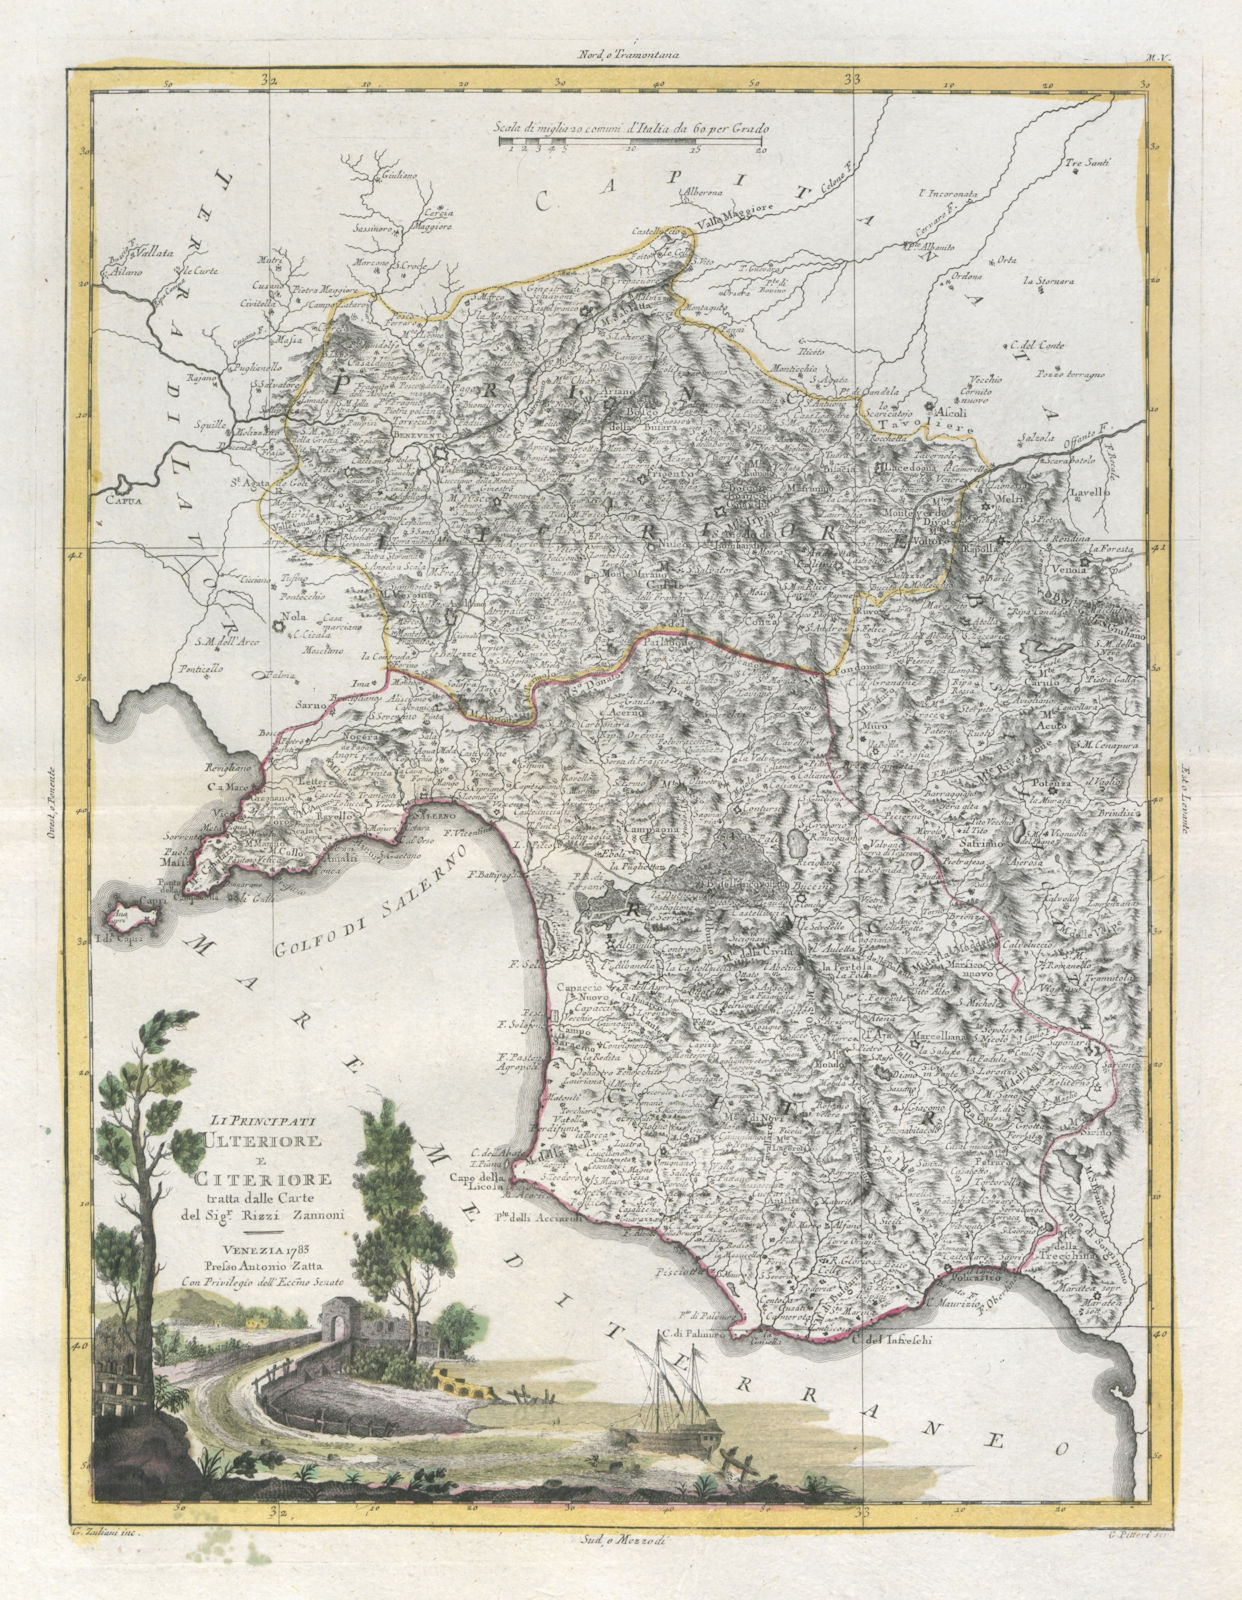 "Li Principati Ulteriore e Citeriore…" Southern Campagna. Amalfi. ZATTA 1784 map